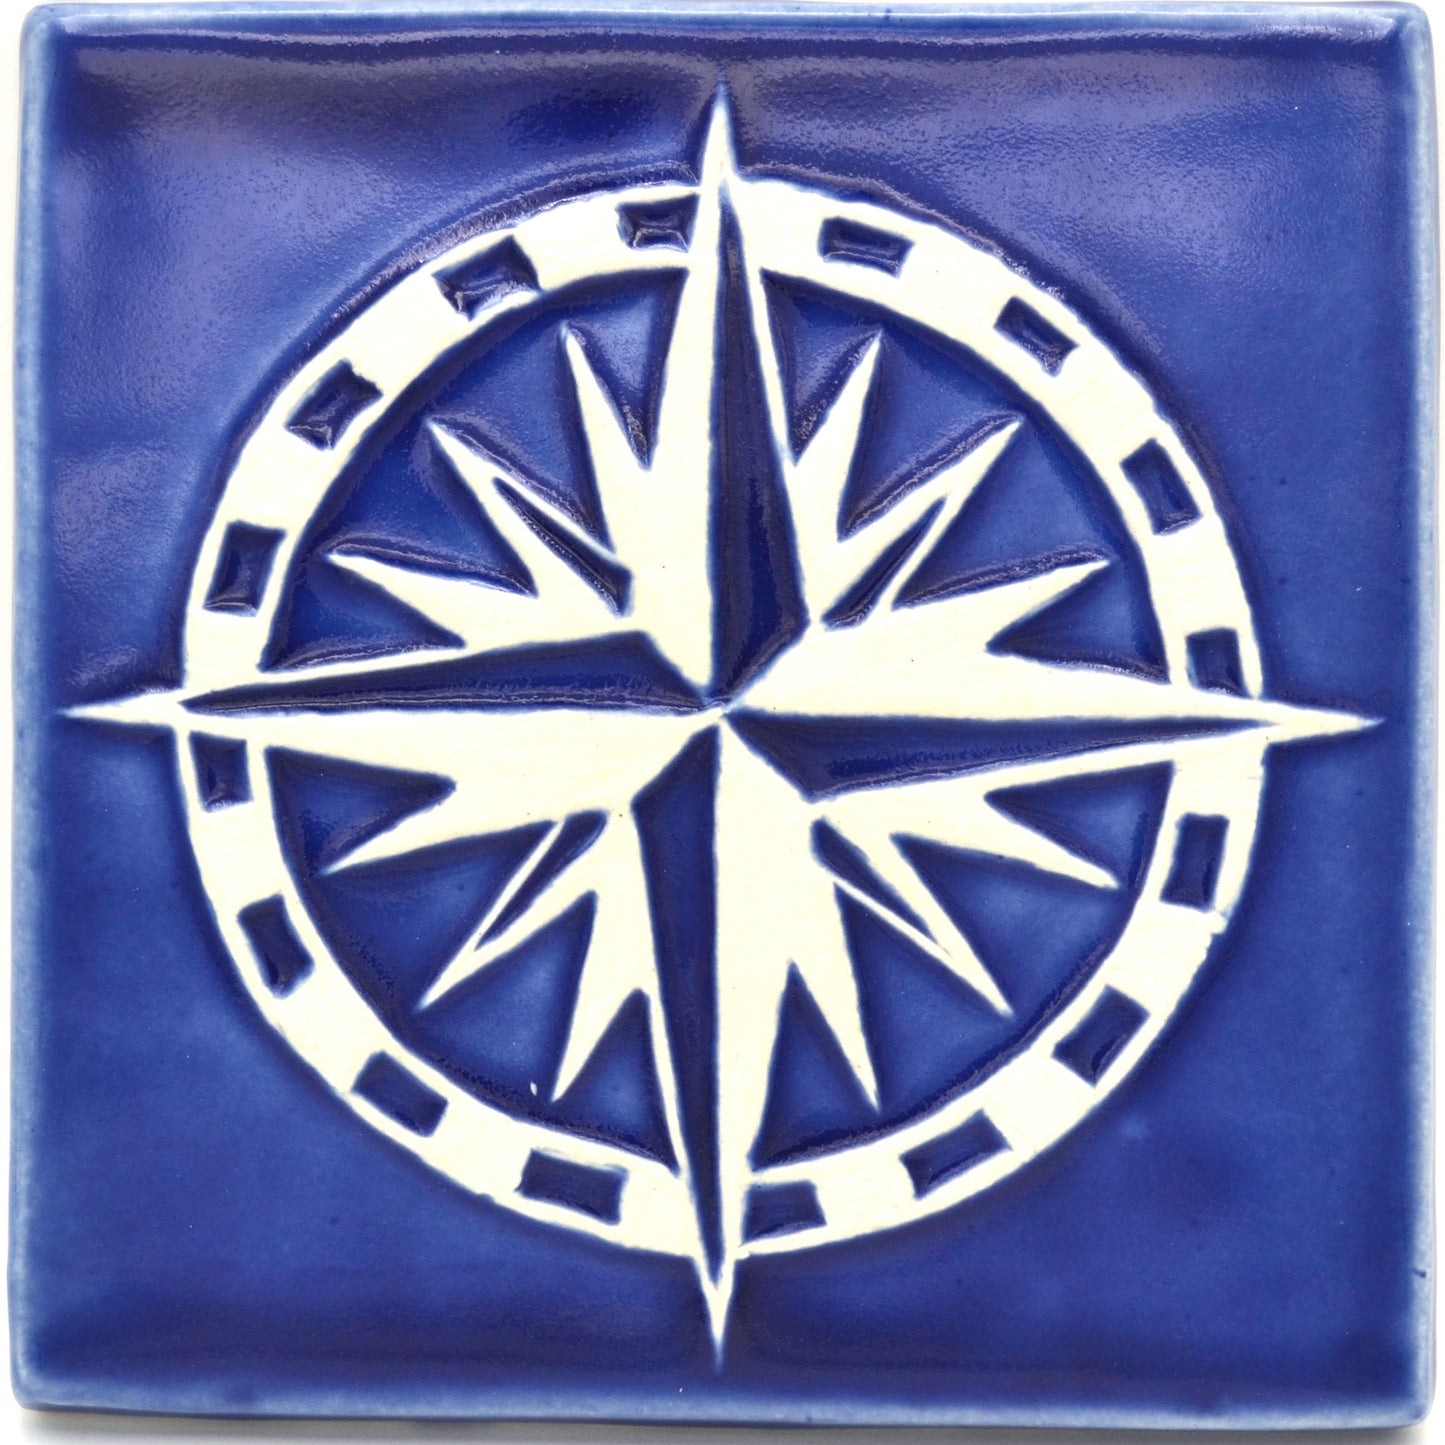 4x4 compass rose blue